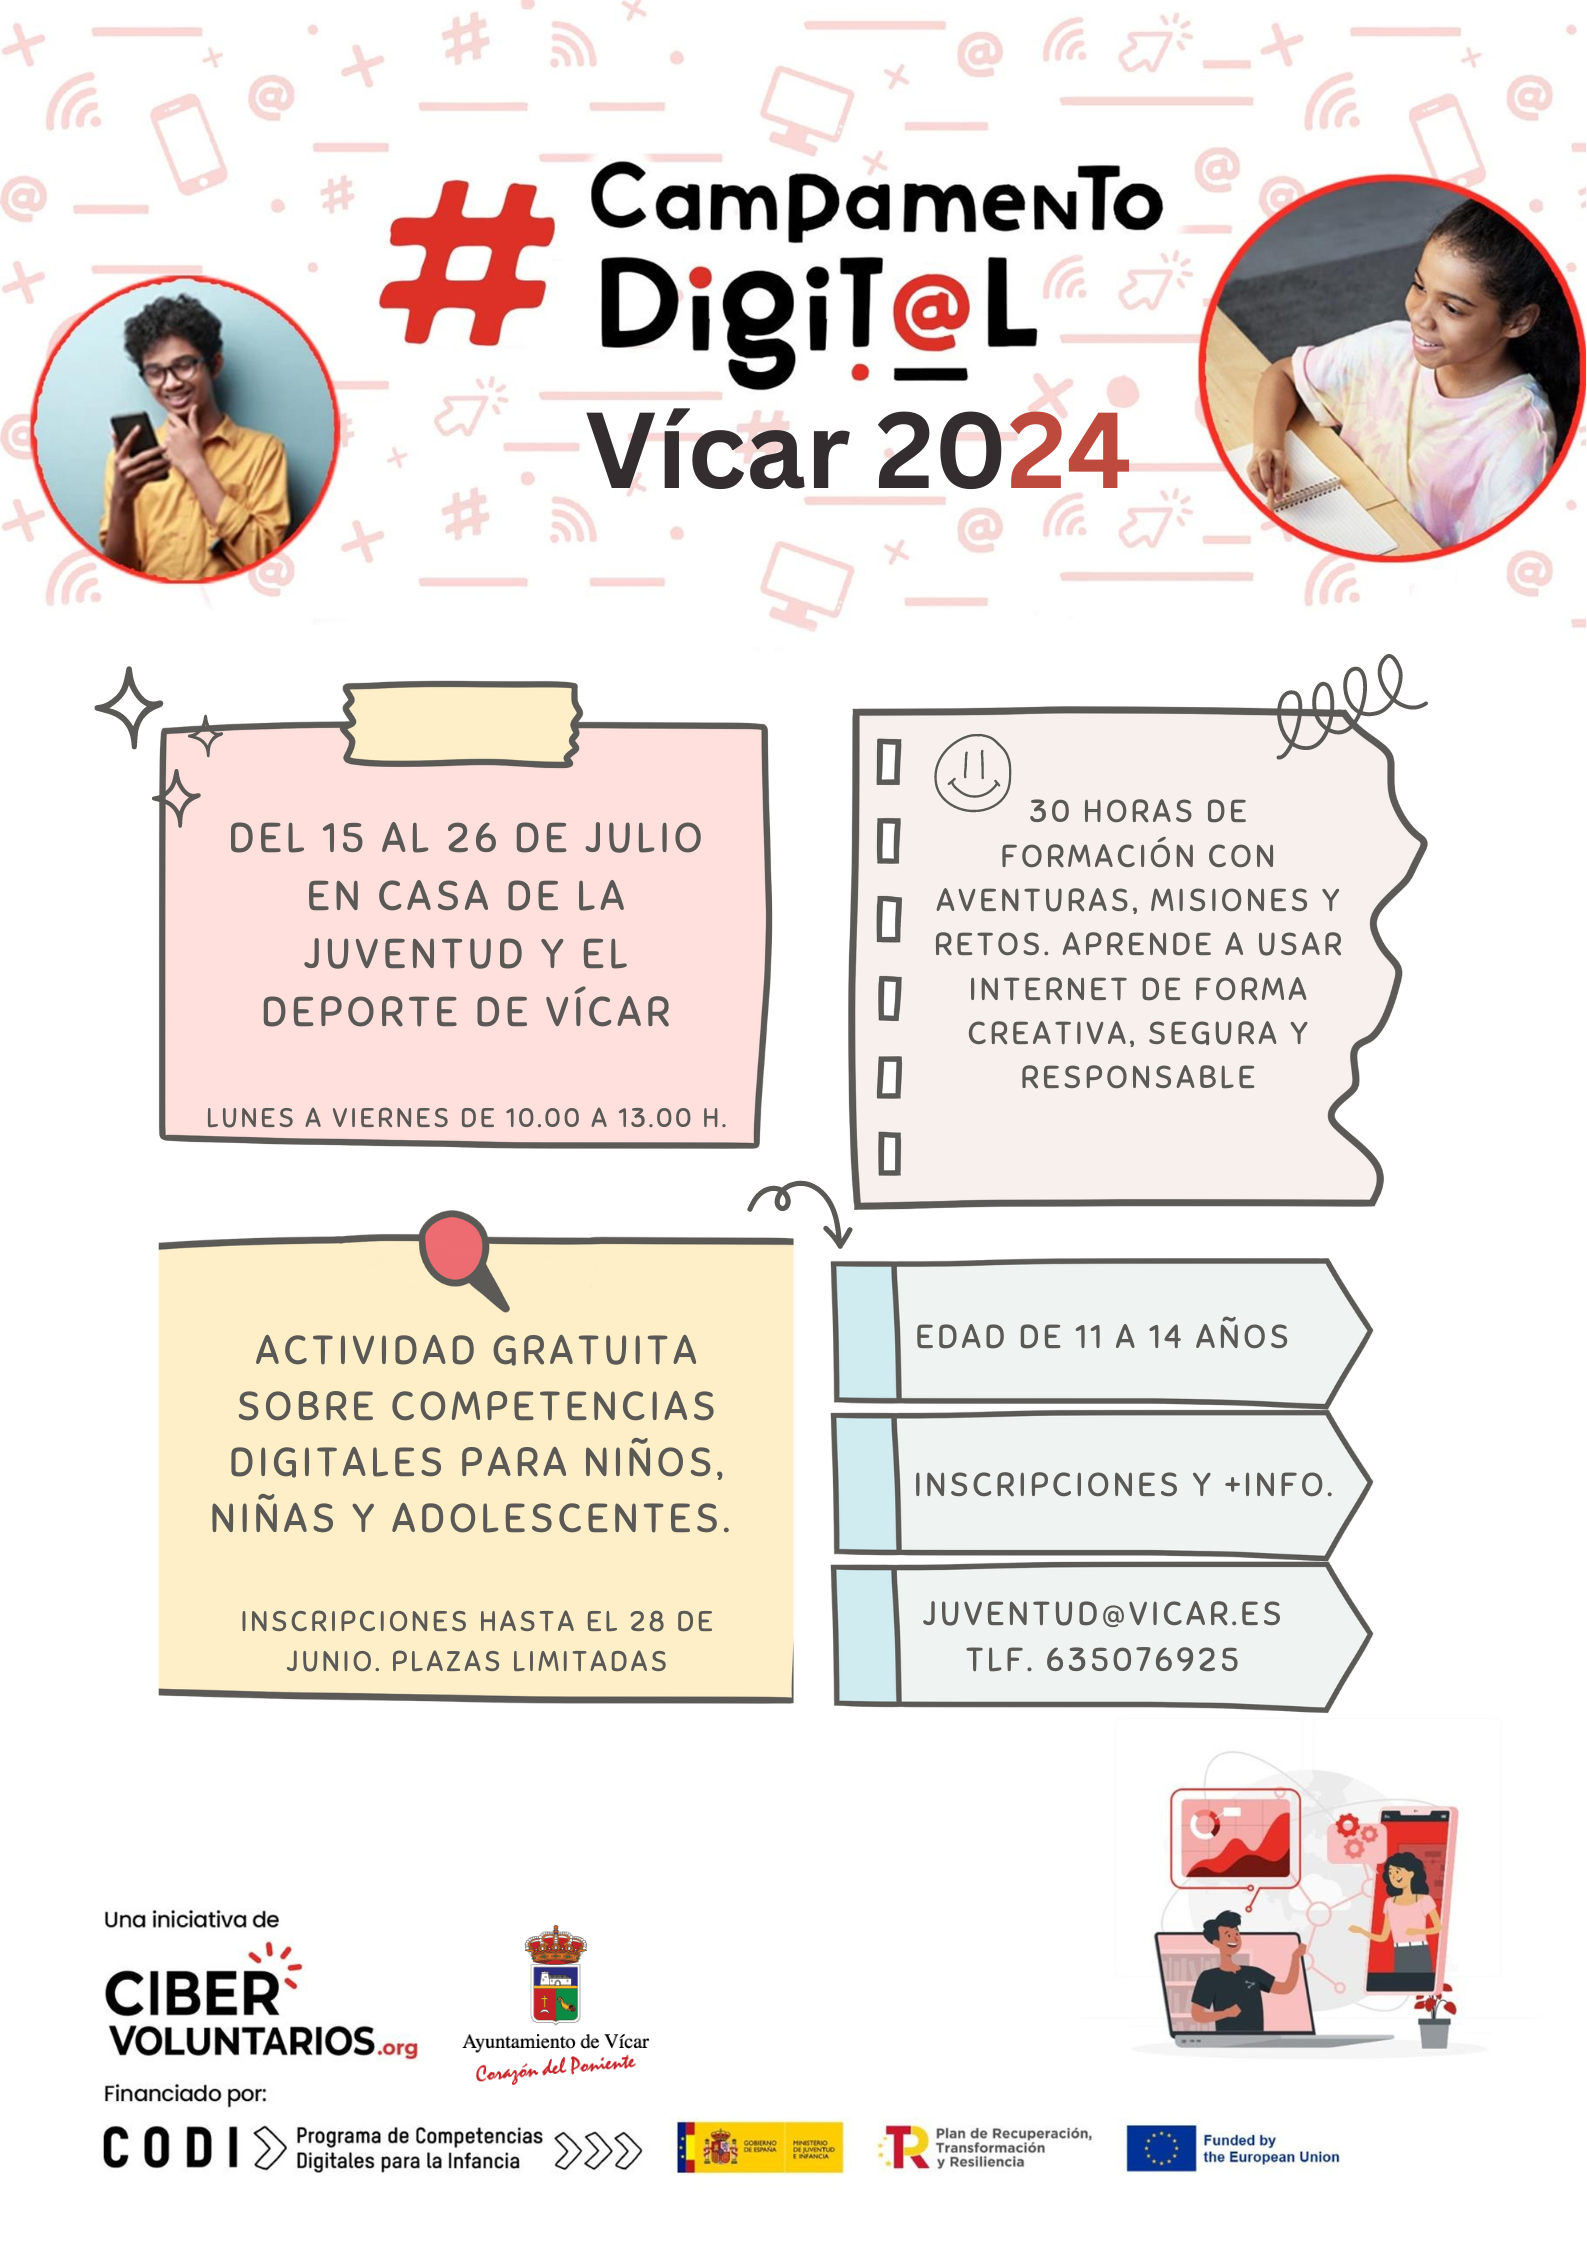 CAMPAMENTO DIGITAL VÍCAR 2024